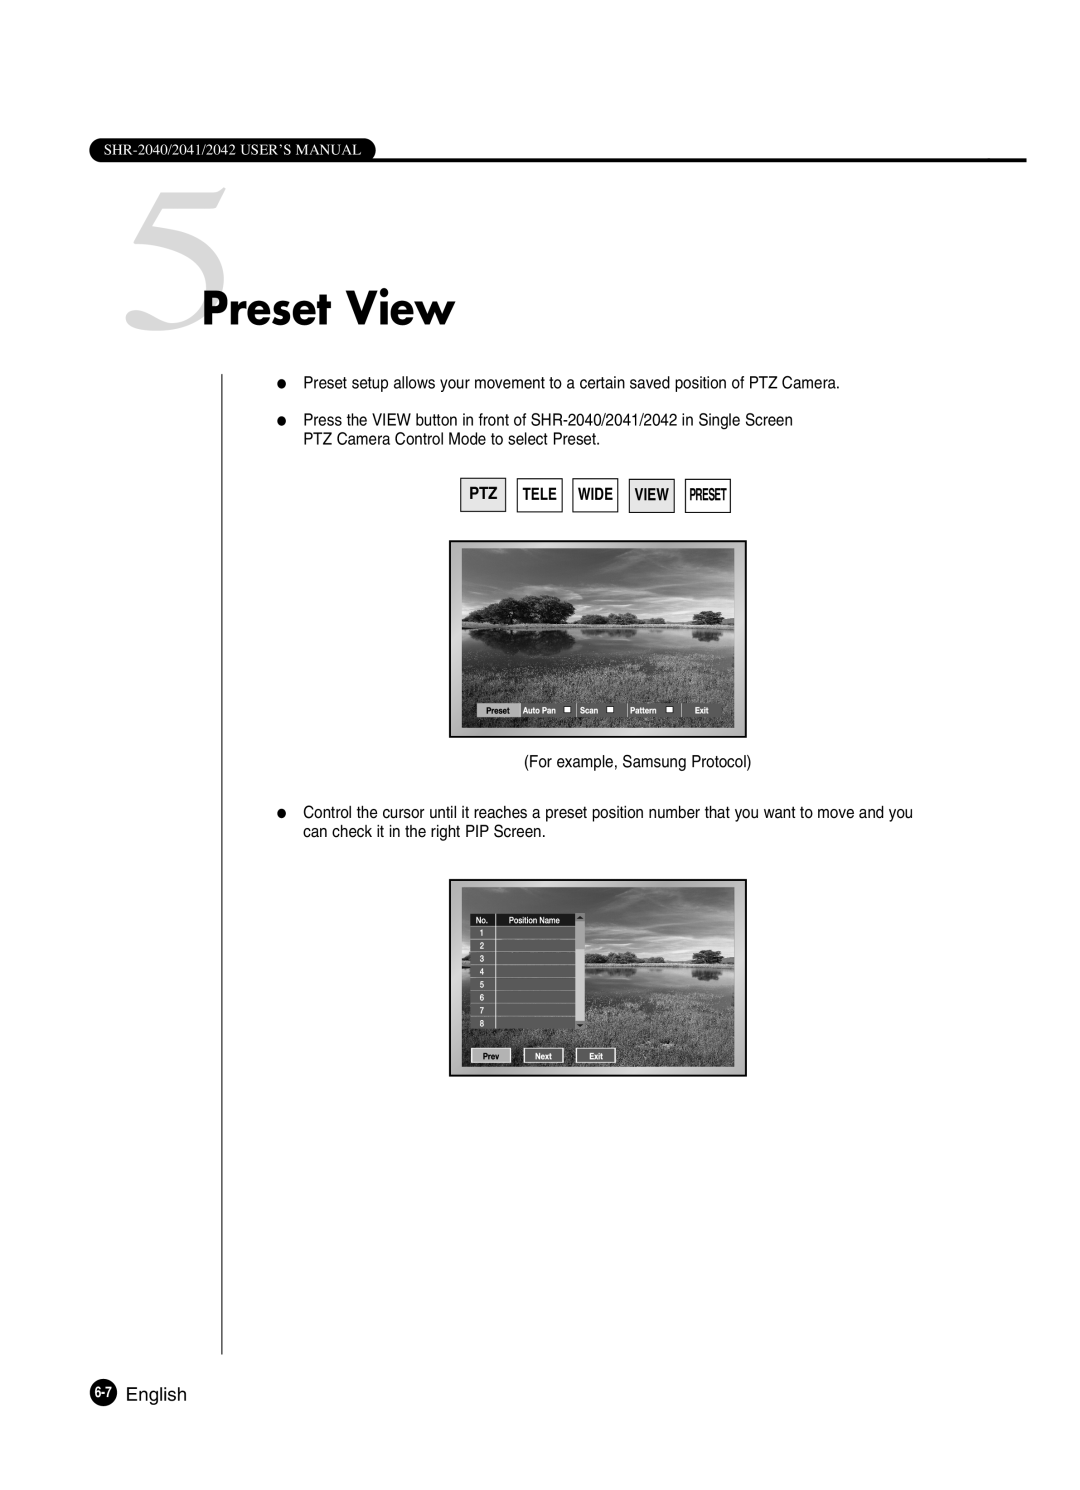 Samsung SHR-2042P250, SHR-2040P250 manual 5Preset View, English, Ptz Tele Wide View Preset 